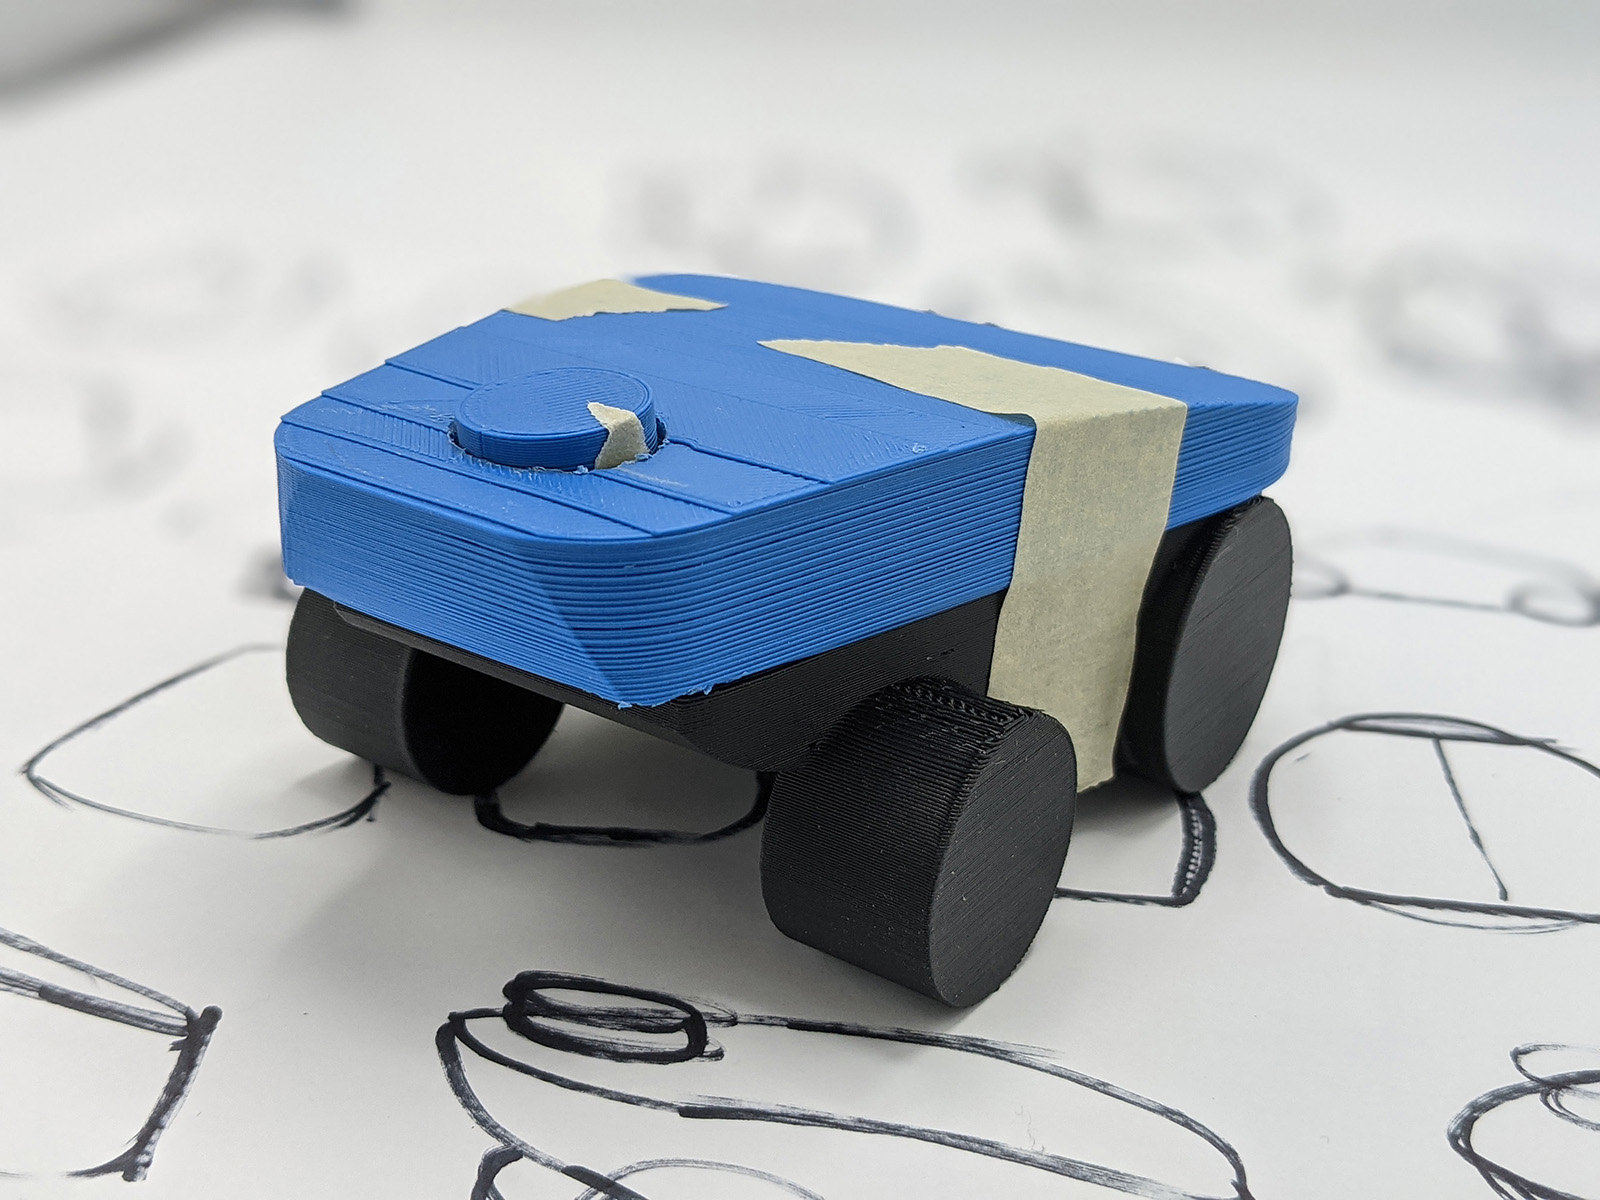 A blue robot that mimics the look of a truck.